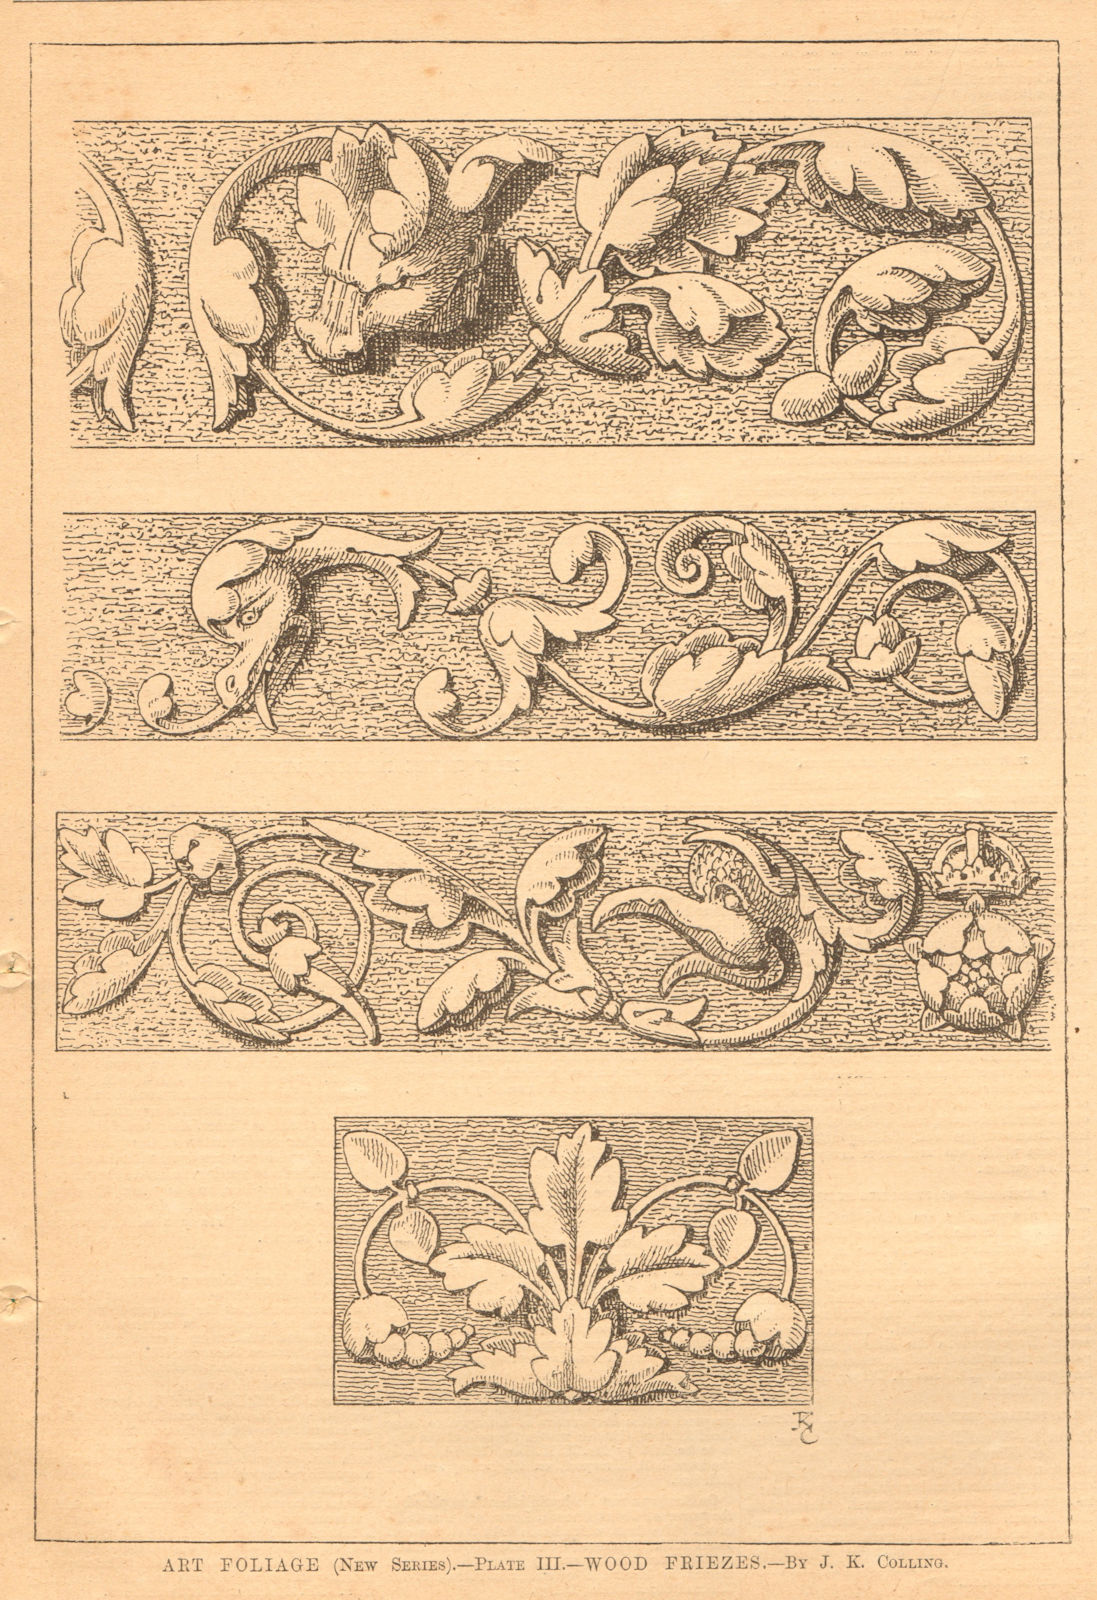 Associate Product Art Foliage (New series) - Plate III - Wood Friezes - by J.K. Colling. 1901